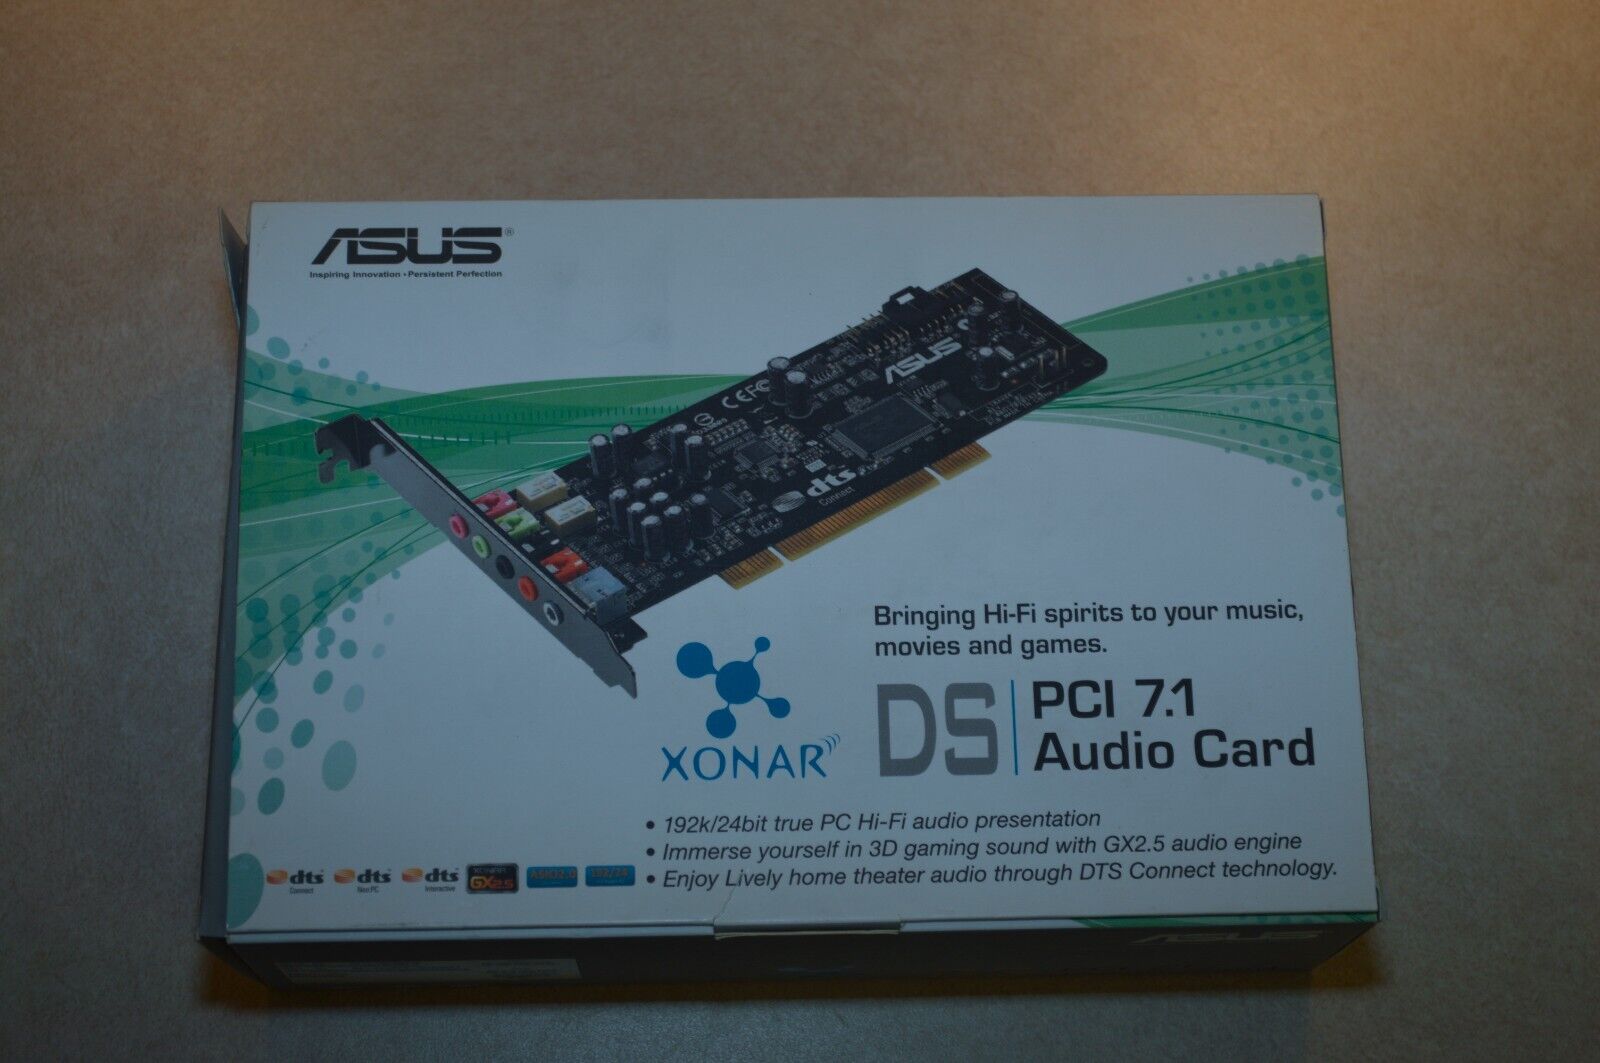 Asus Xonar DS/A 7.1 Audio Card 192k/24bit PCI